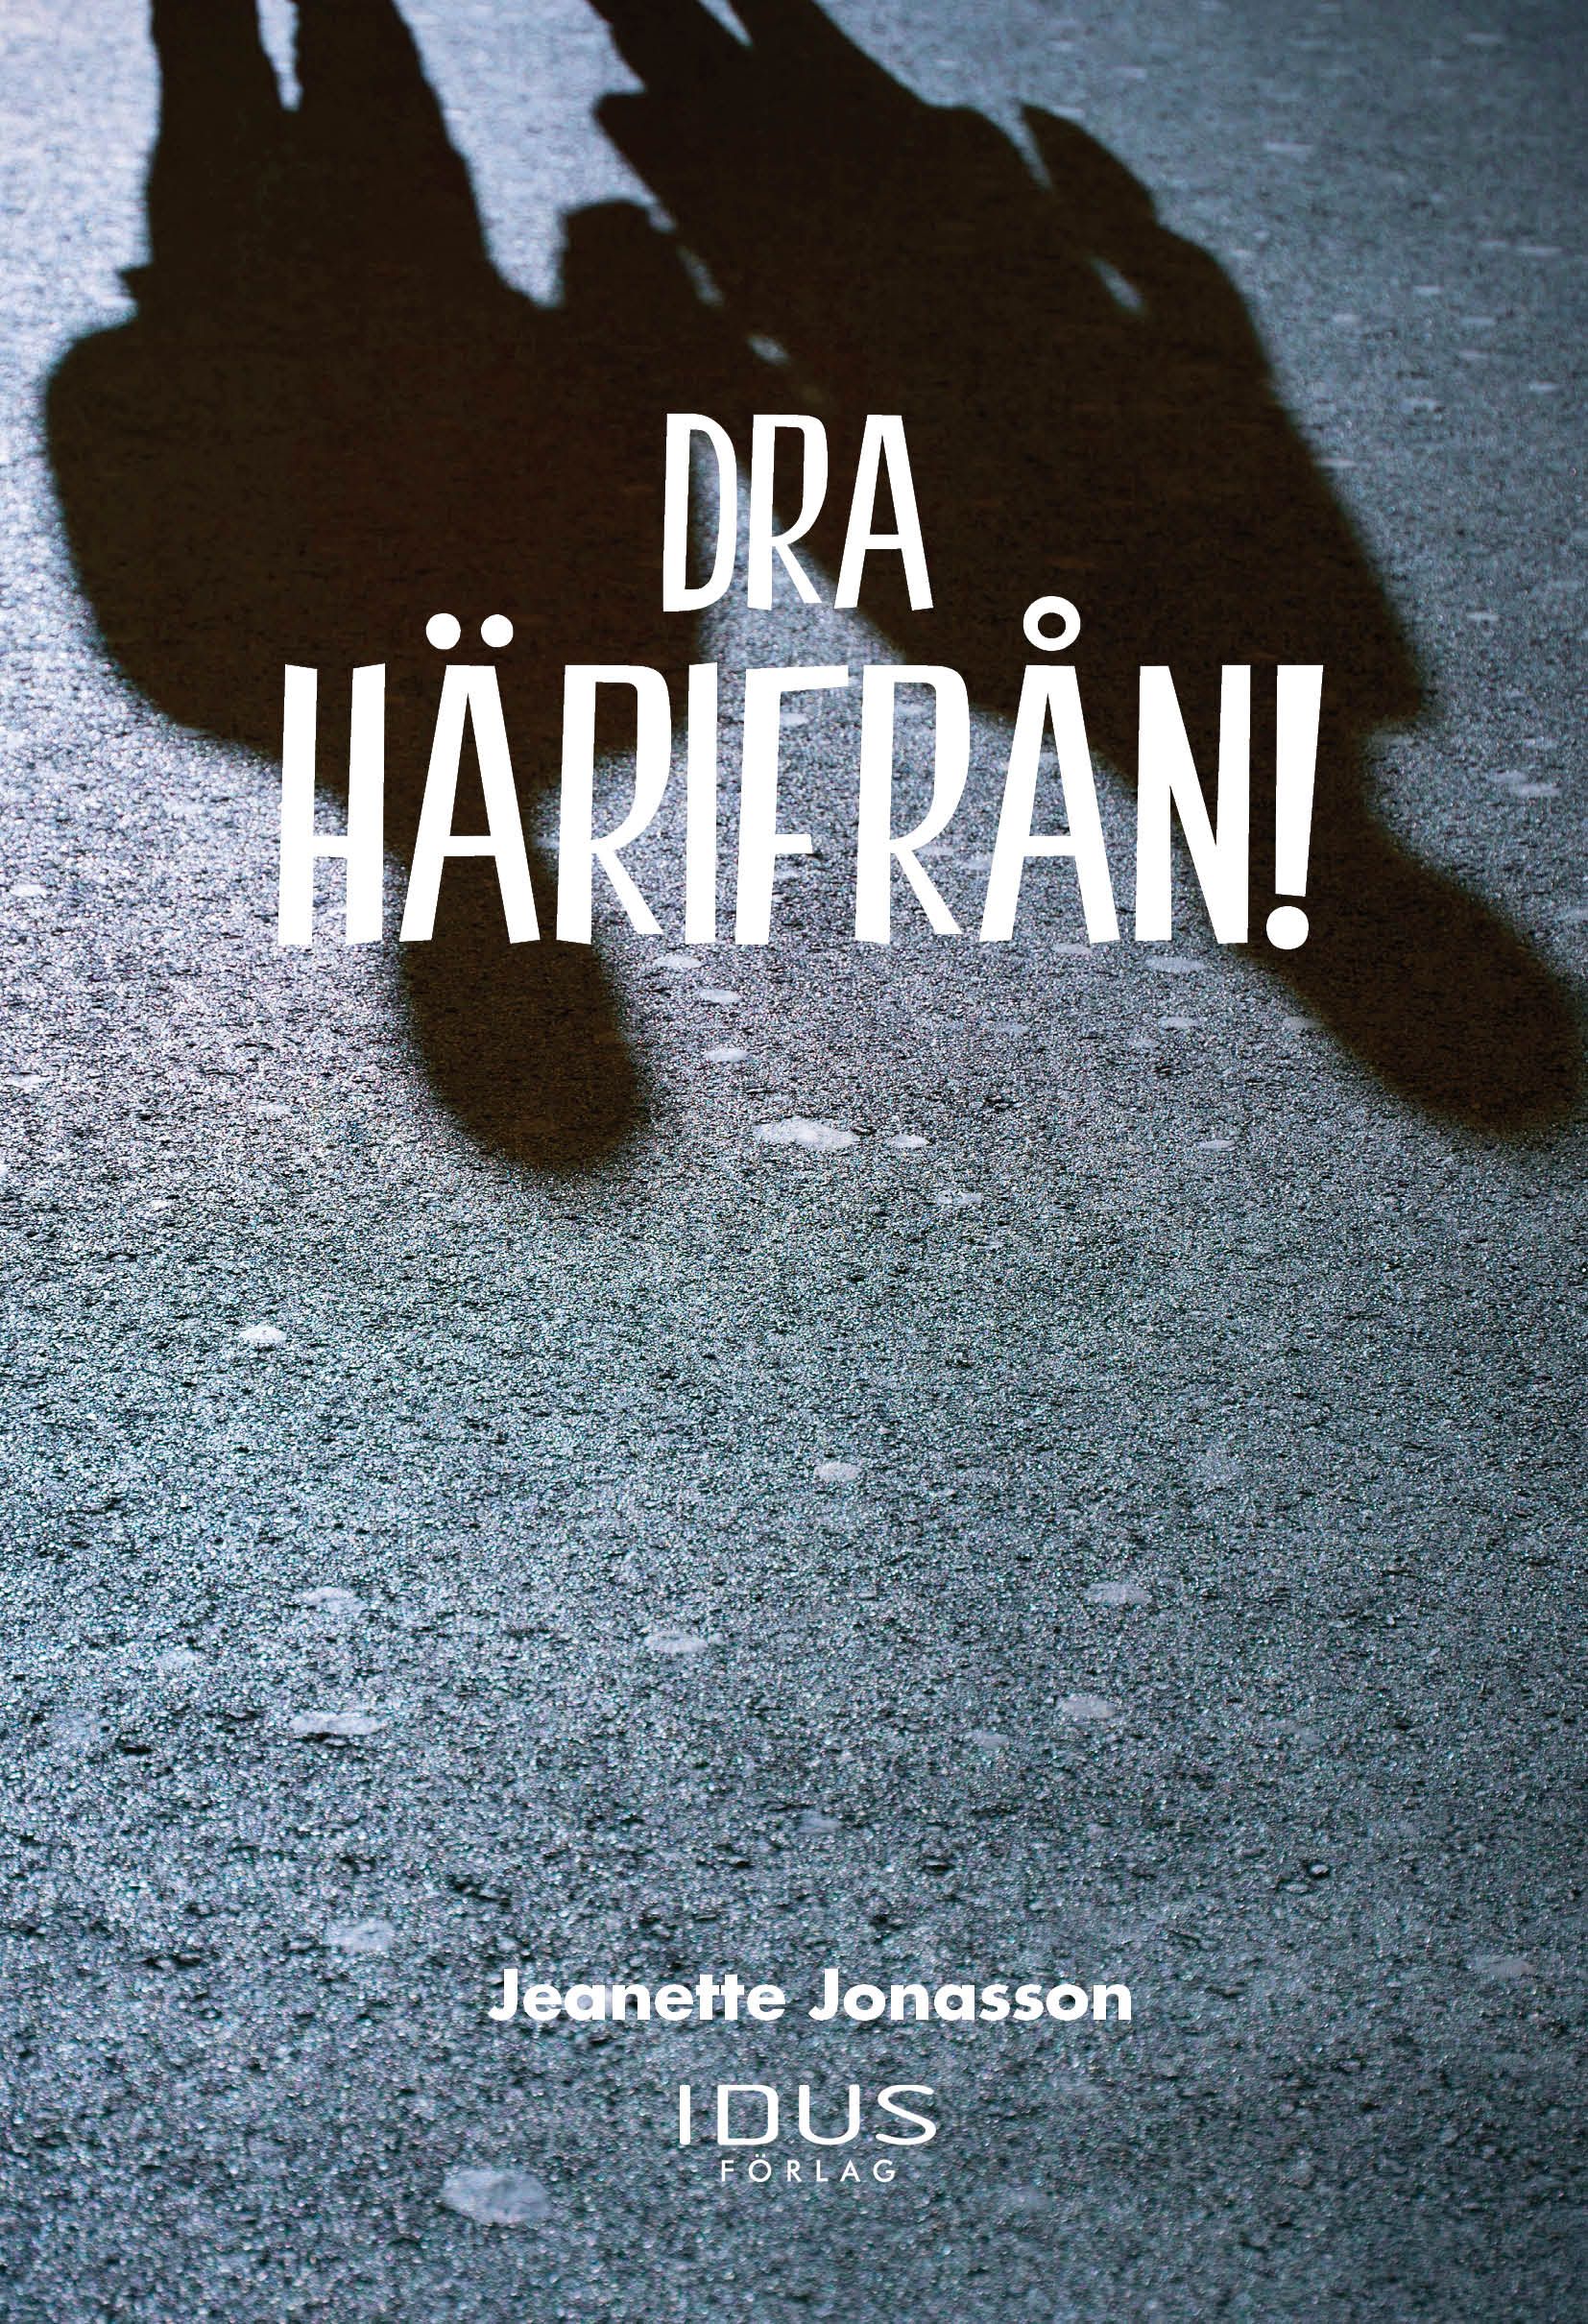 Dra härifrån!, audiobook by Jeanette Jonasson